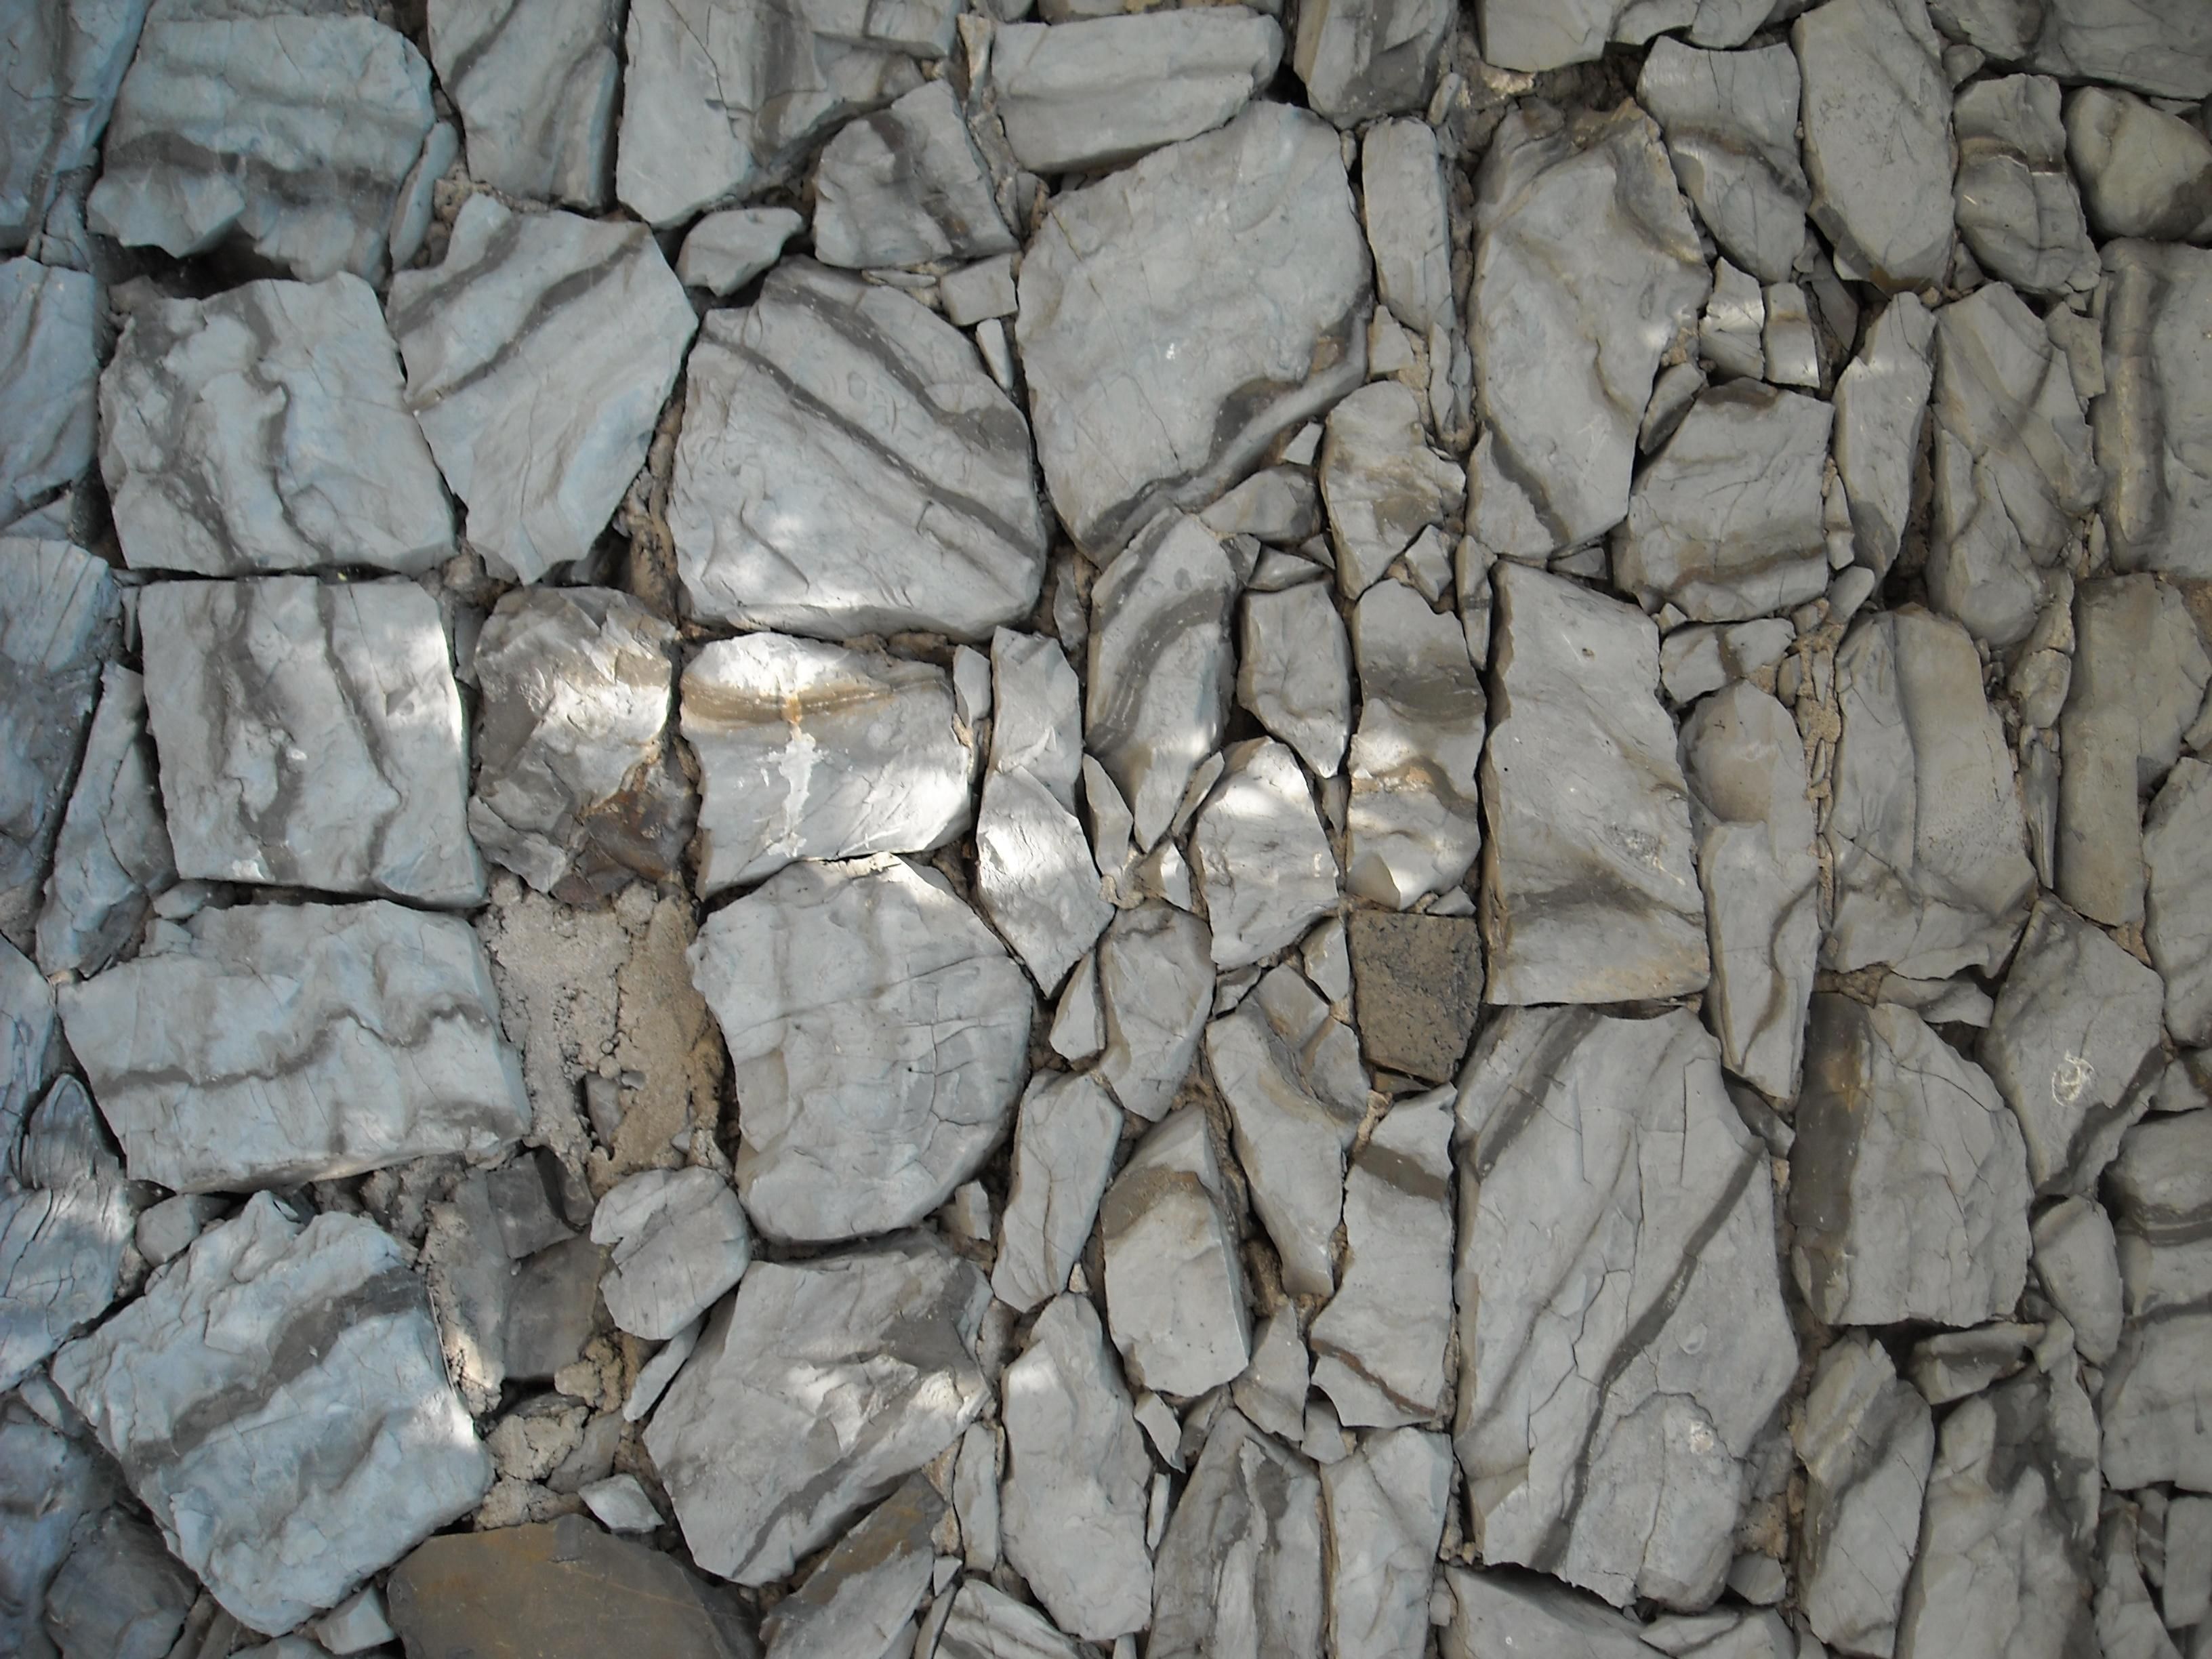 File:Rock pattern texture.jpg - Wikimedia Commons